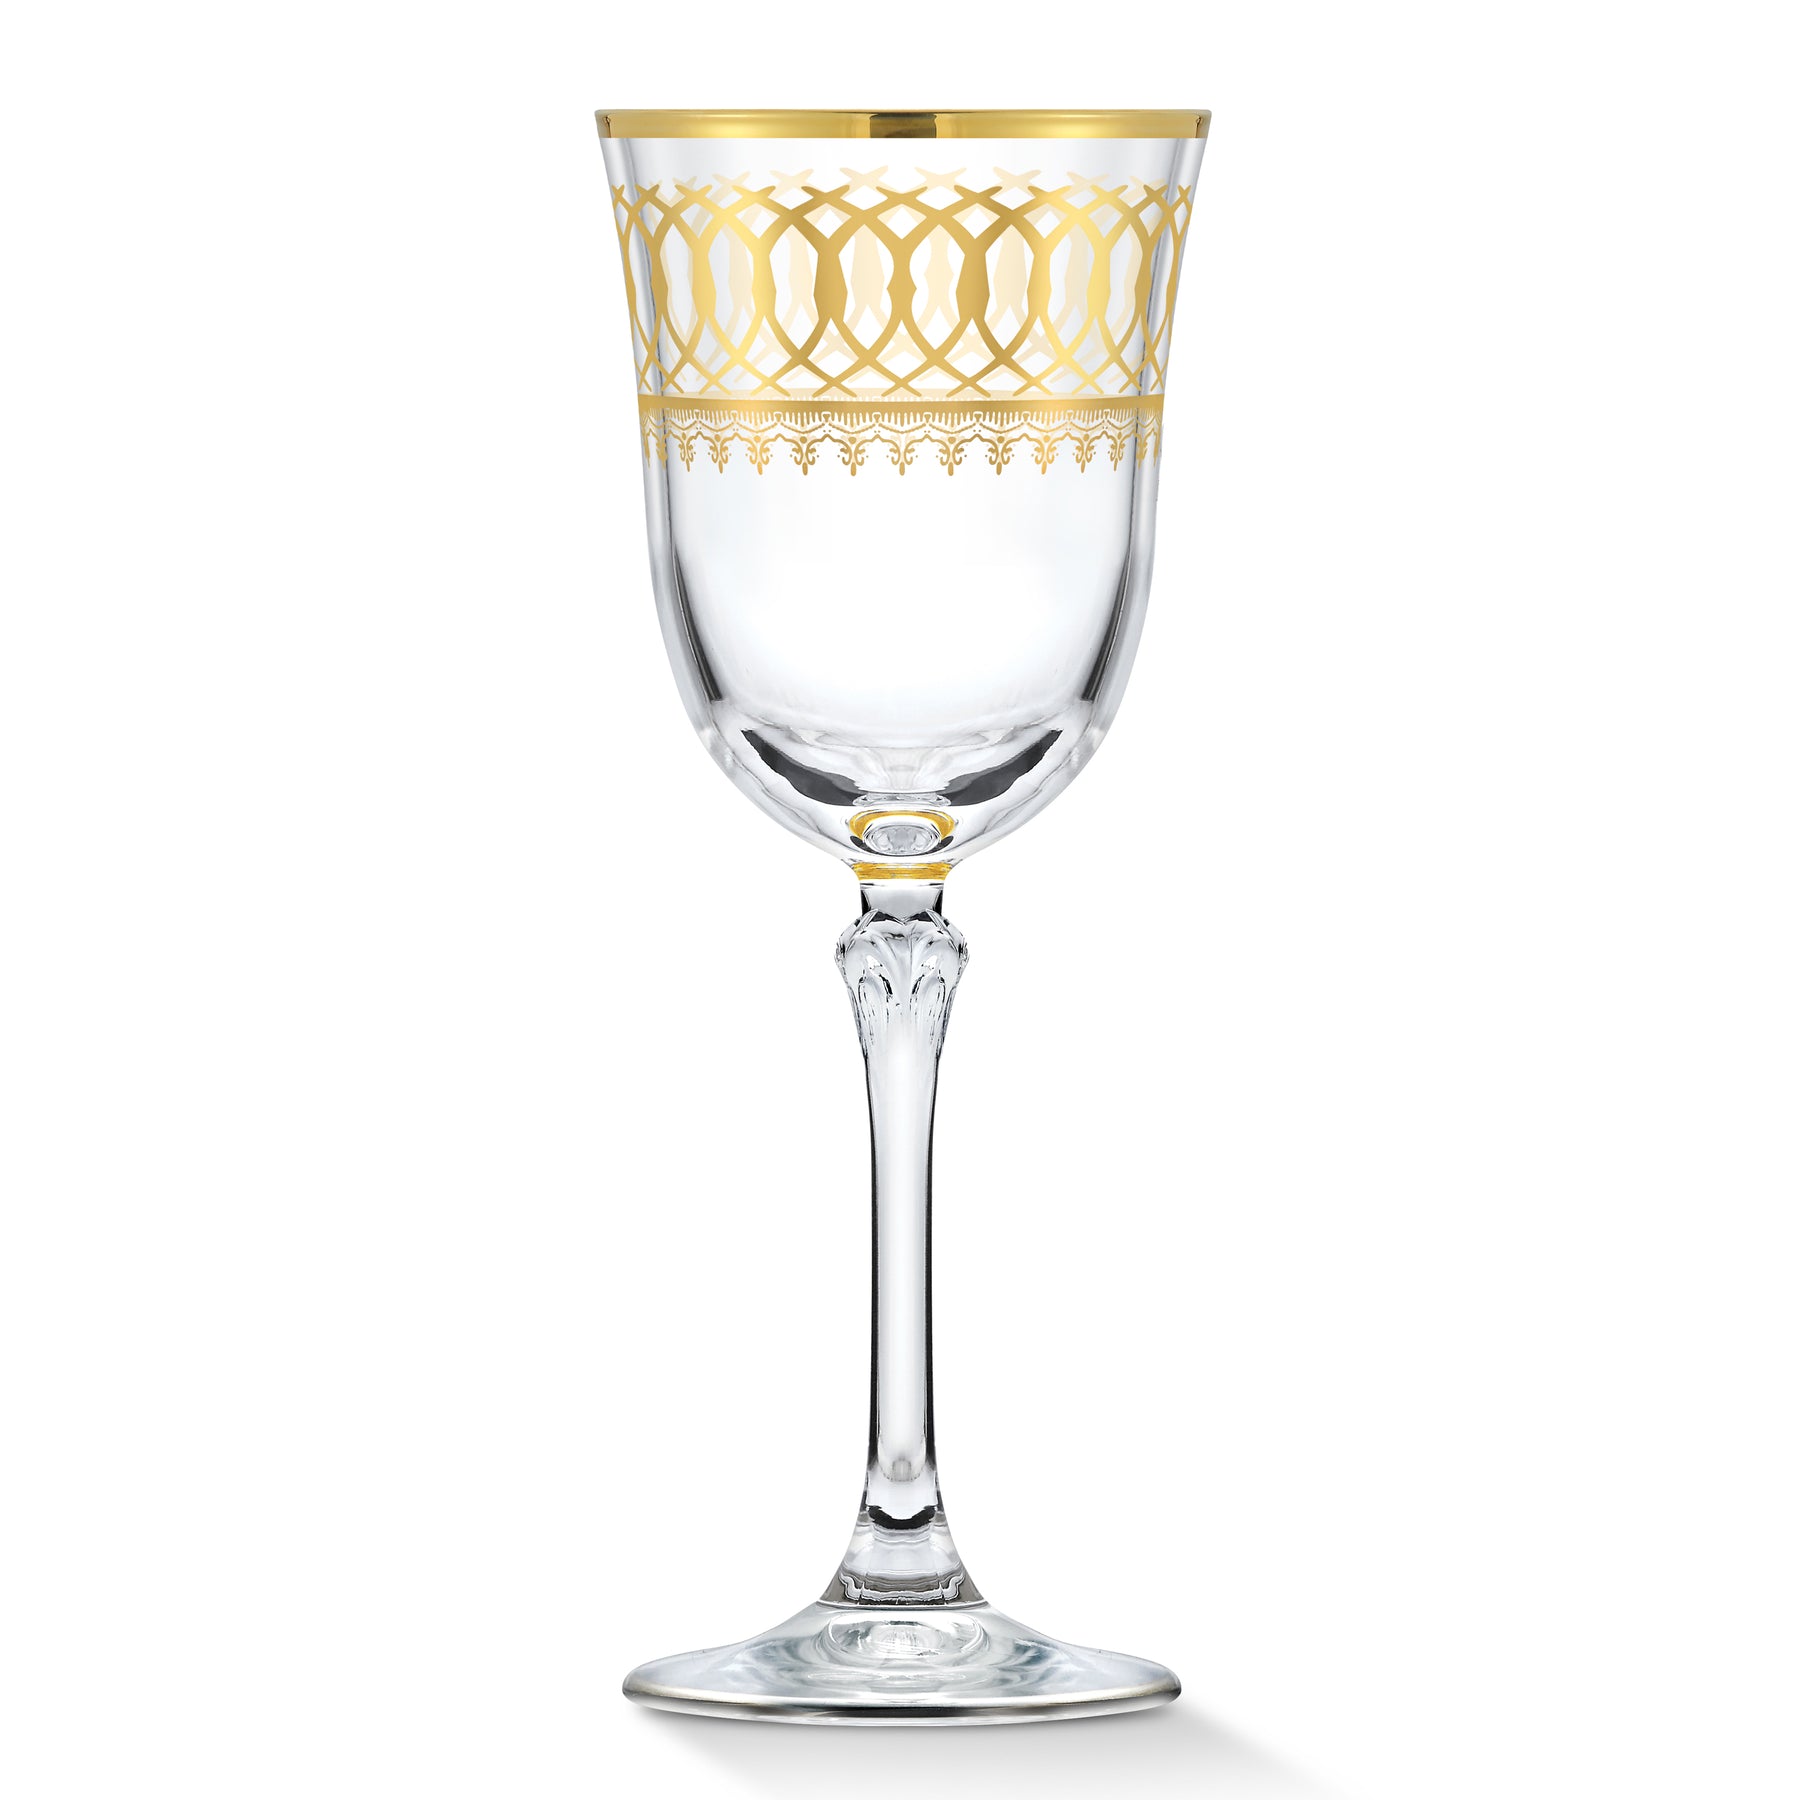 Lorenzo Sapphire Gold, Red Wine Glasses 9 Oz, Set Of 4